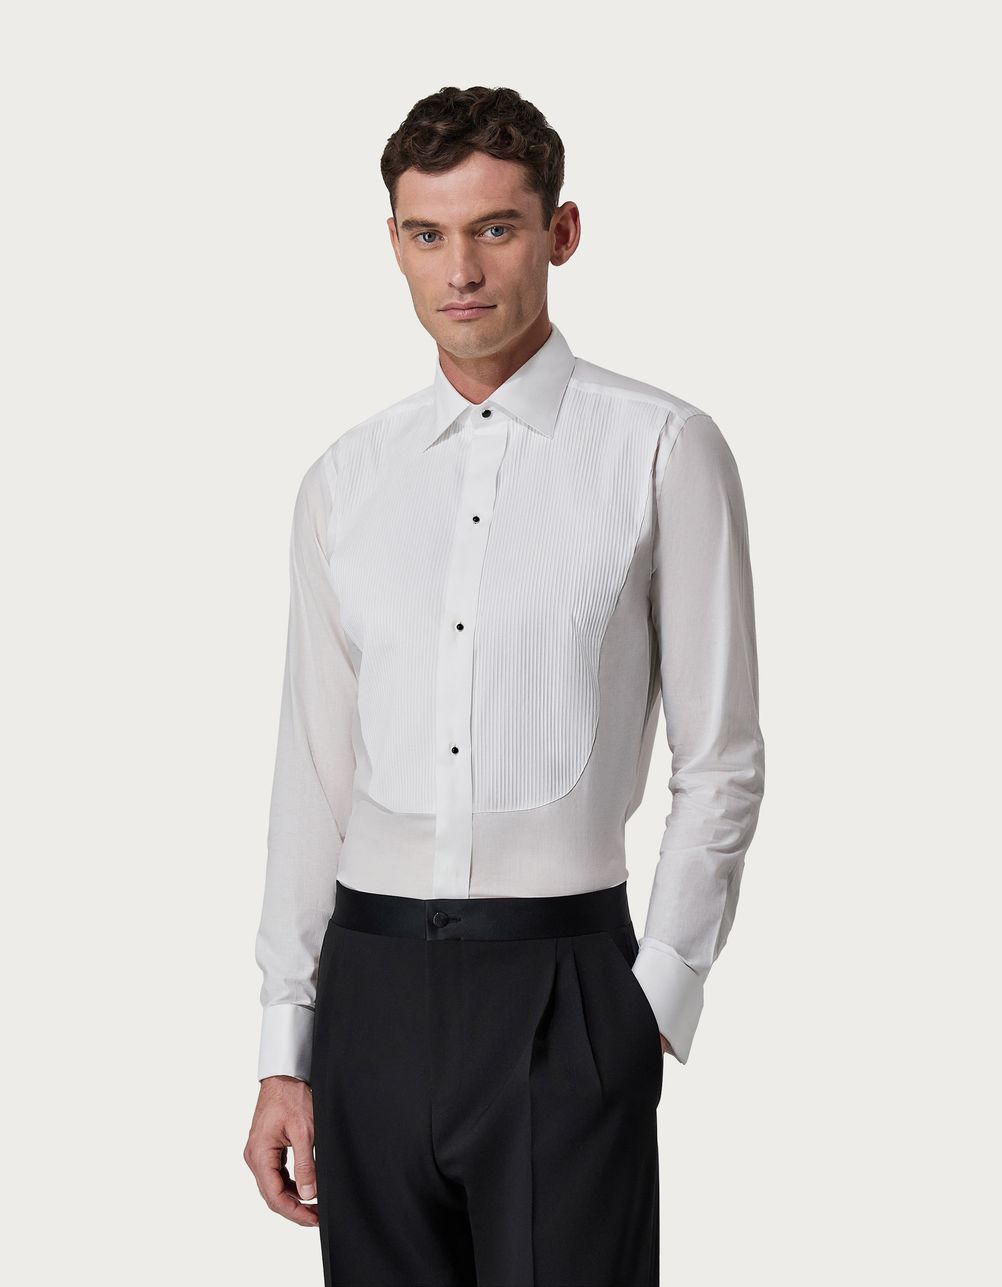 White cotton pleated dress shirt